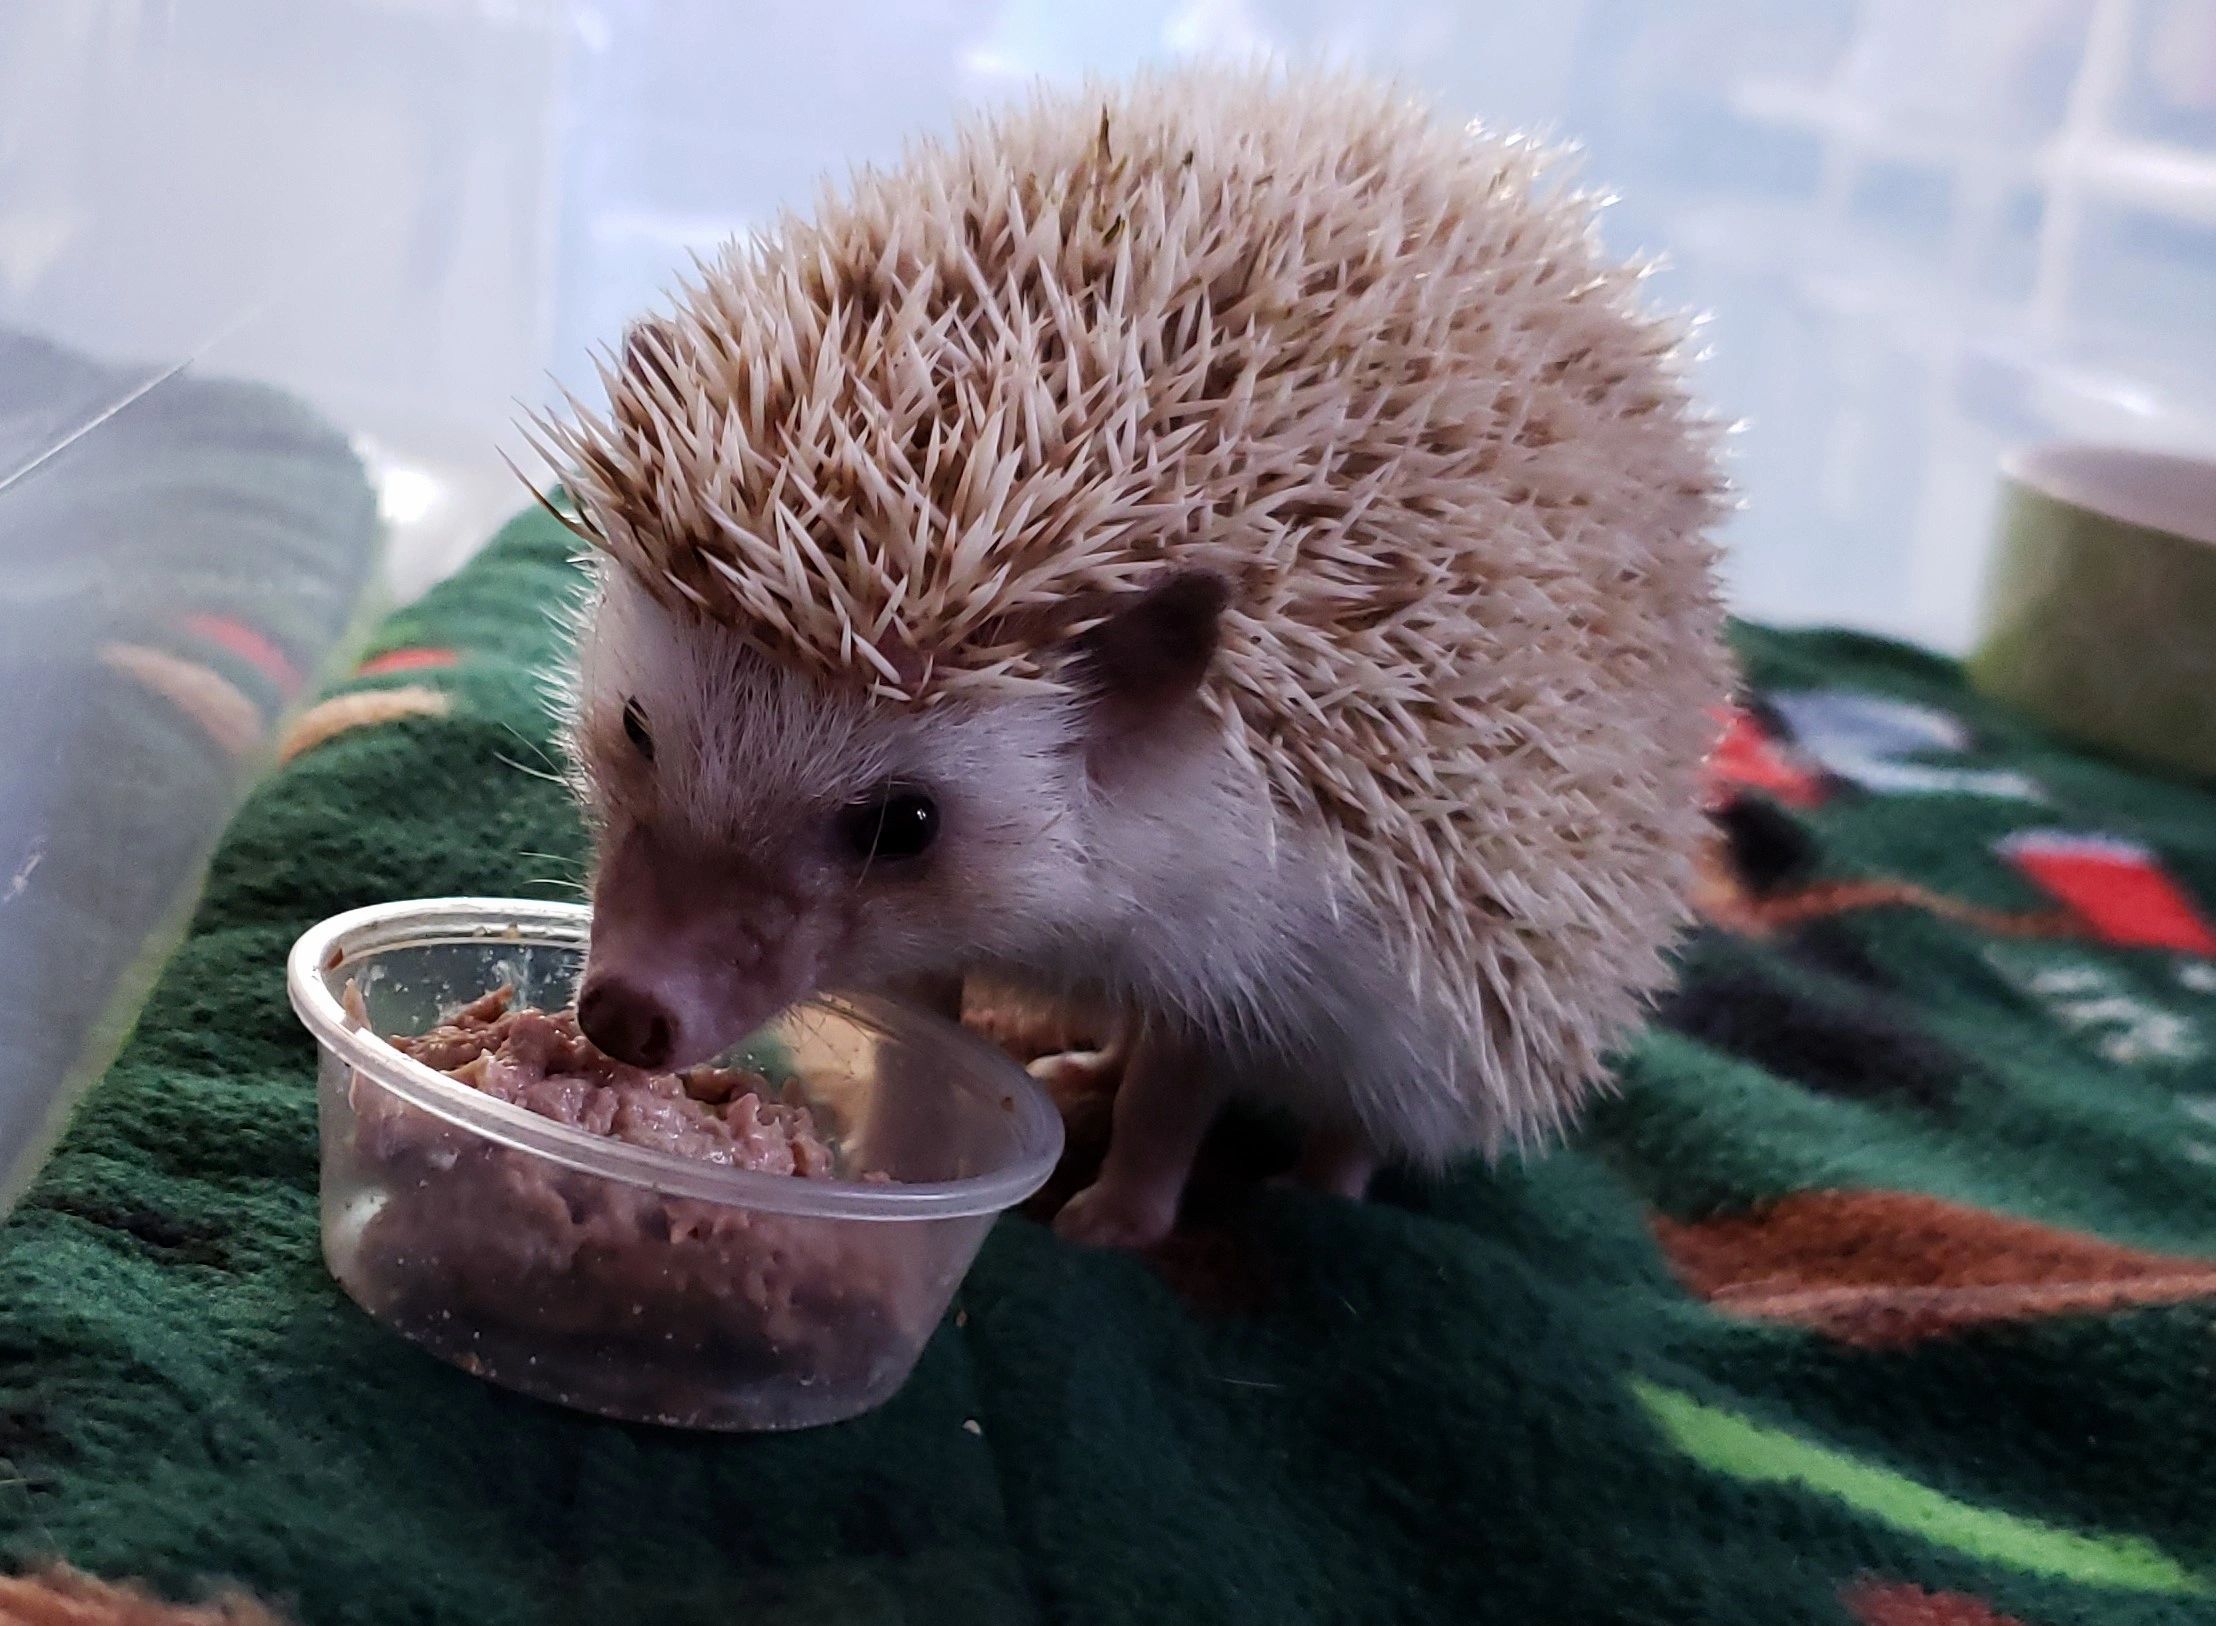 hedgehog pet food